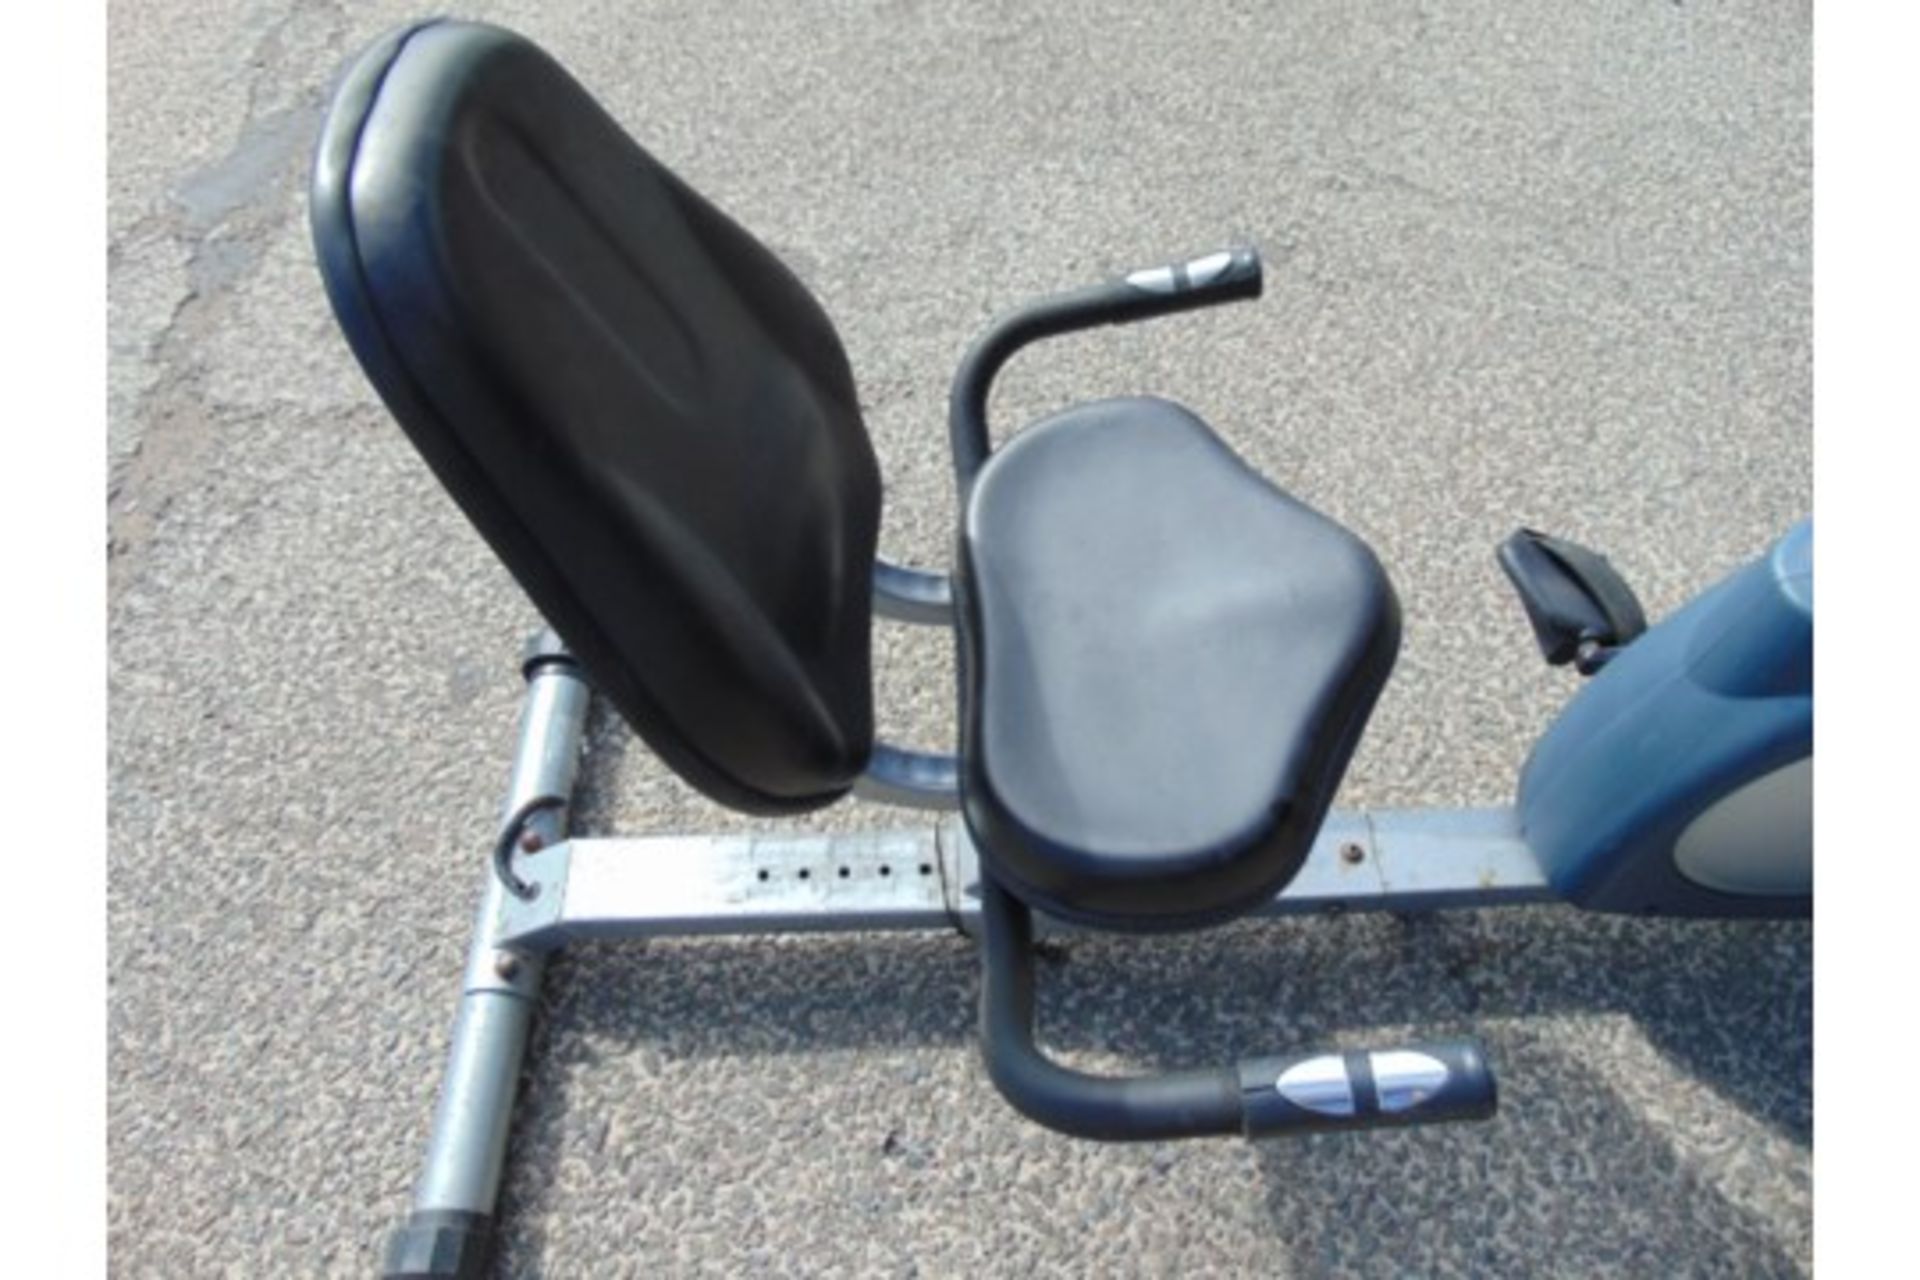 Carl Lewis EMR17 Magnetic Recumbent Exercise Bike - Image 6 of 9